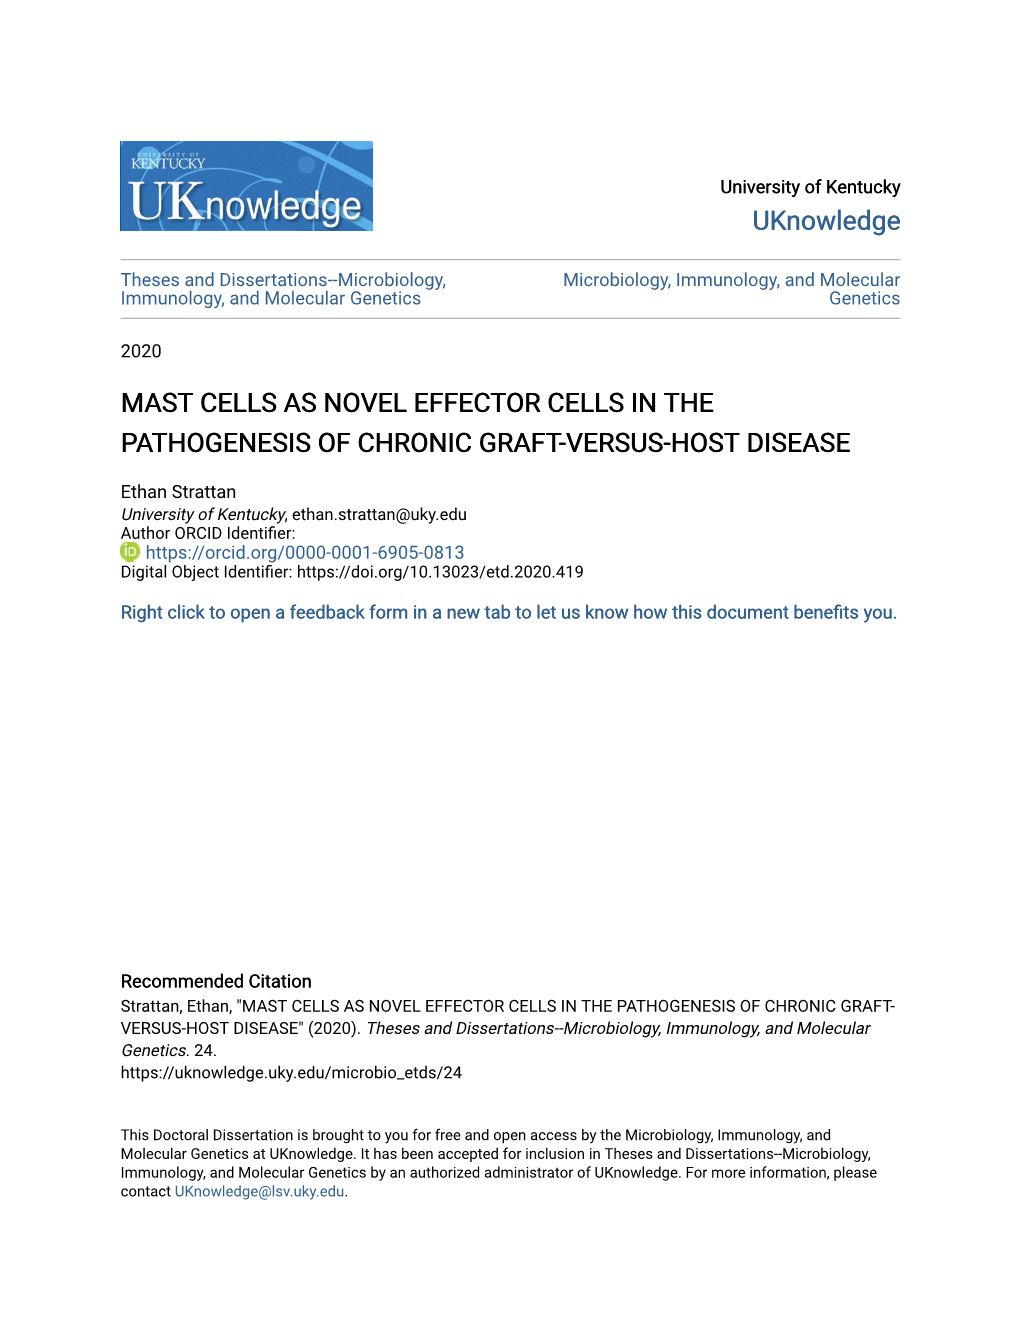 Mast Cells As Novel Effector Cells in the Pathogenesis of Chronic Graft-Versus-Host Disease